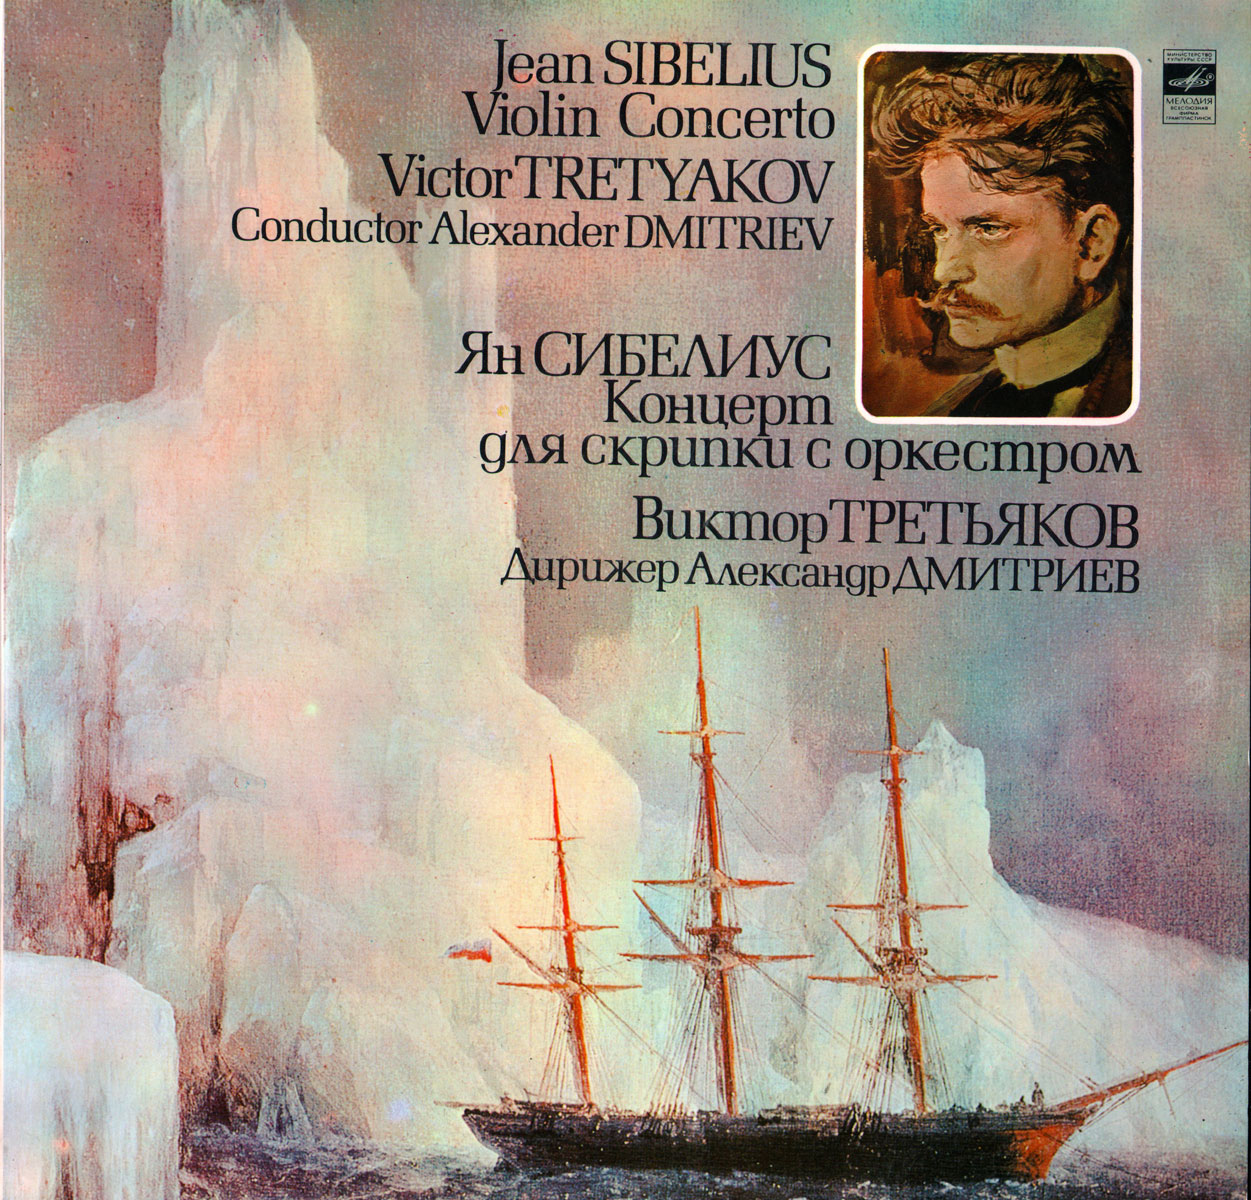 Ян Сибелиус: Концерт для скрипки с оркестром (Виктор Третьяков)